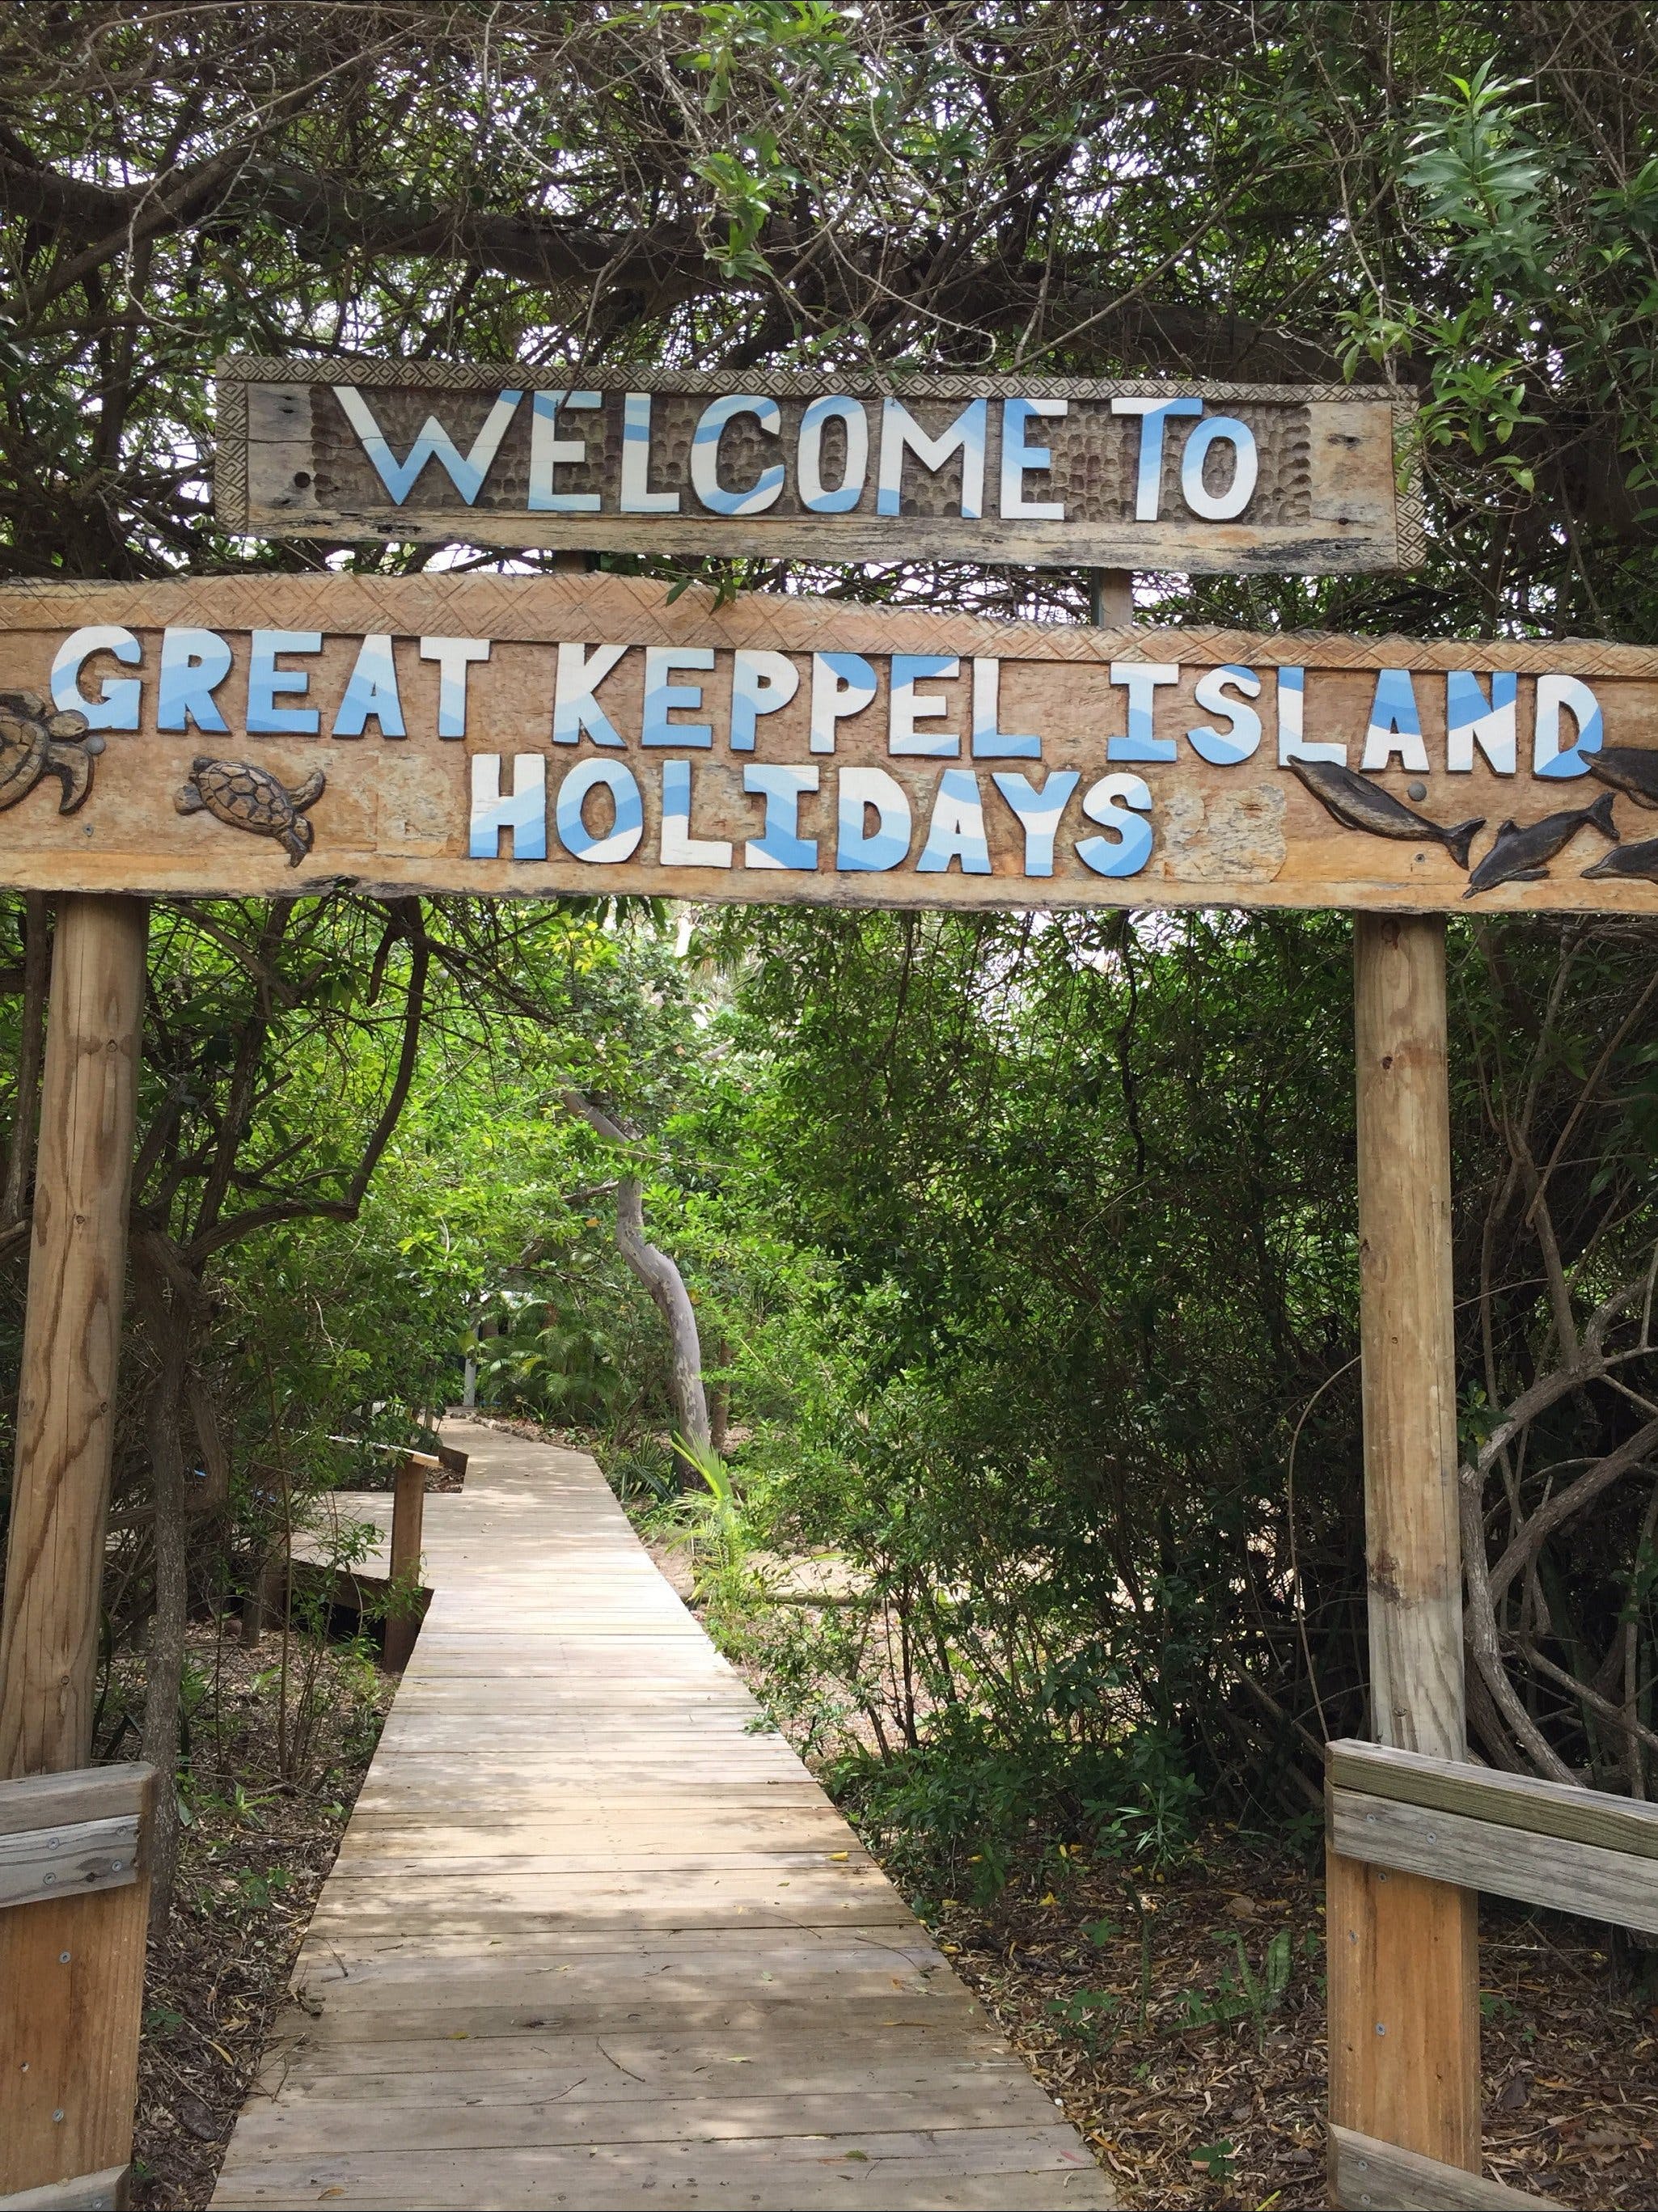 Great Keppel Island Holiday Village - Dalby Accommodation